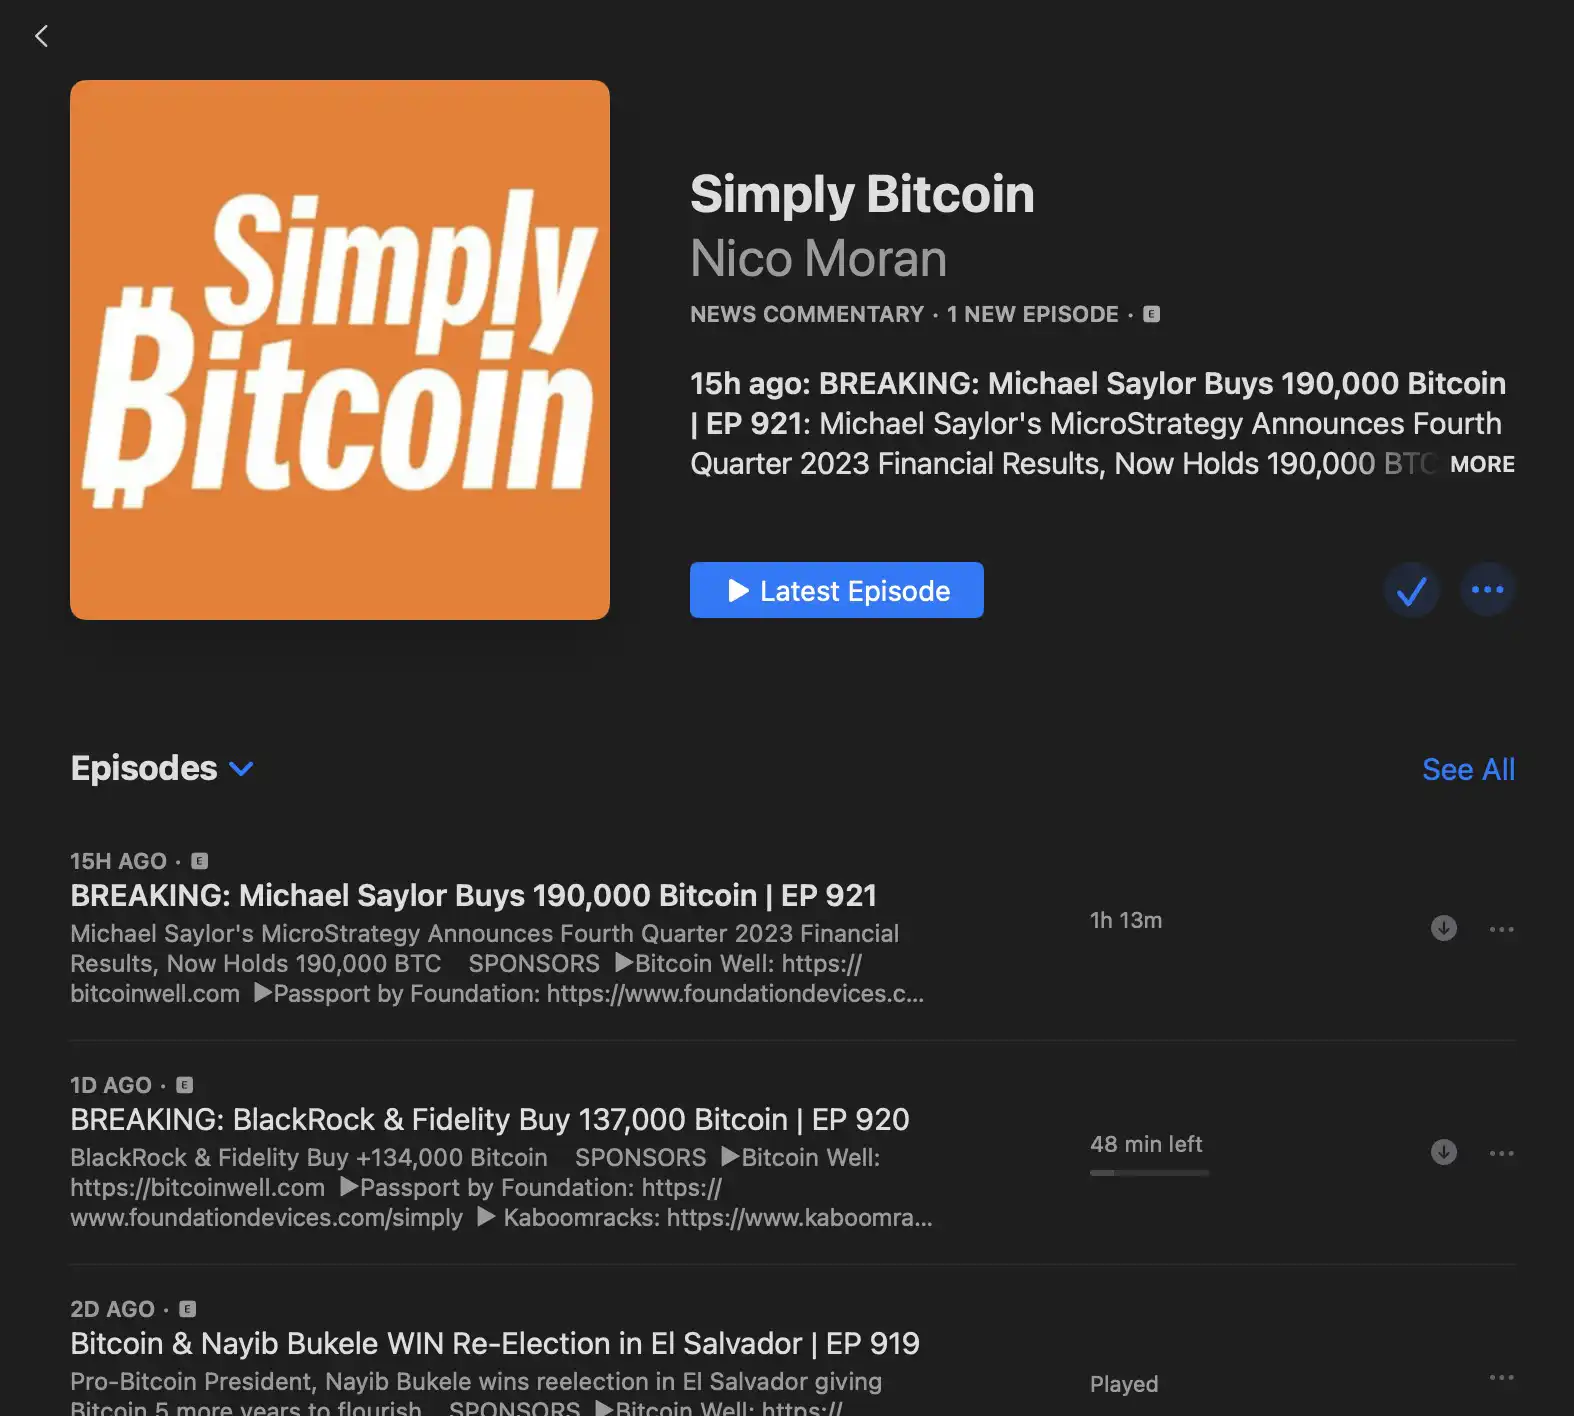 Simply Bitcoin by Nico Moran Podcast